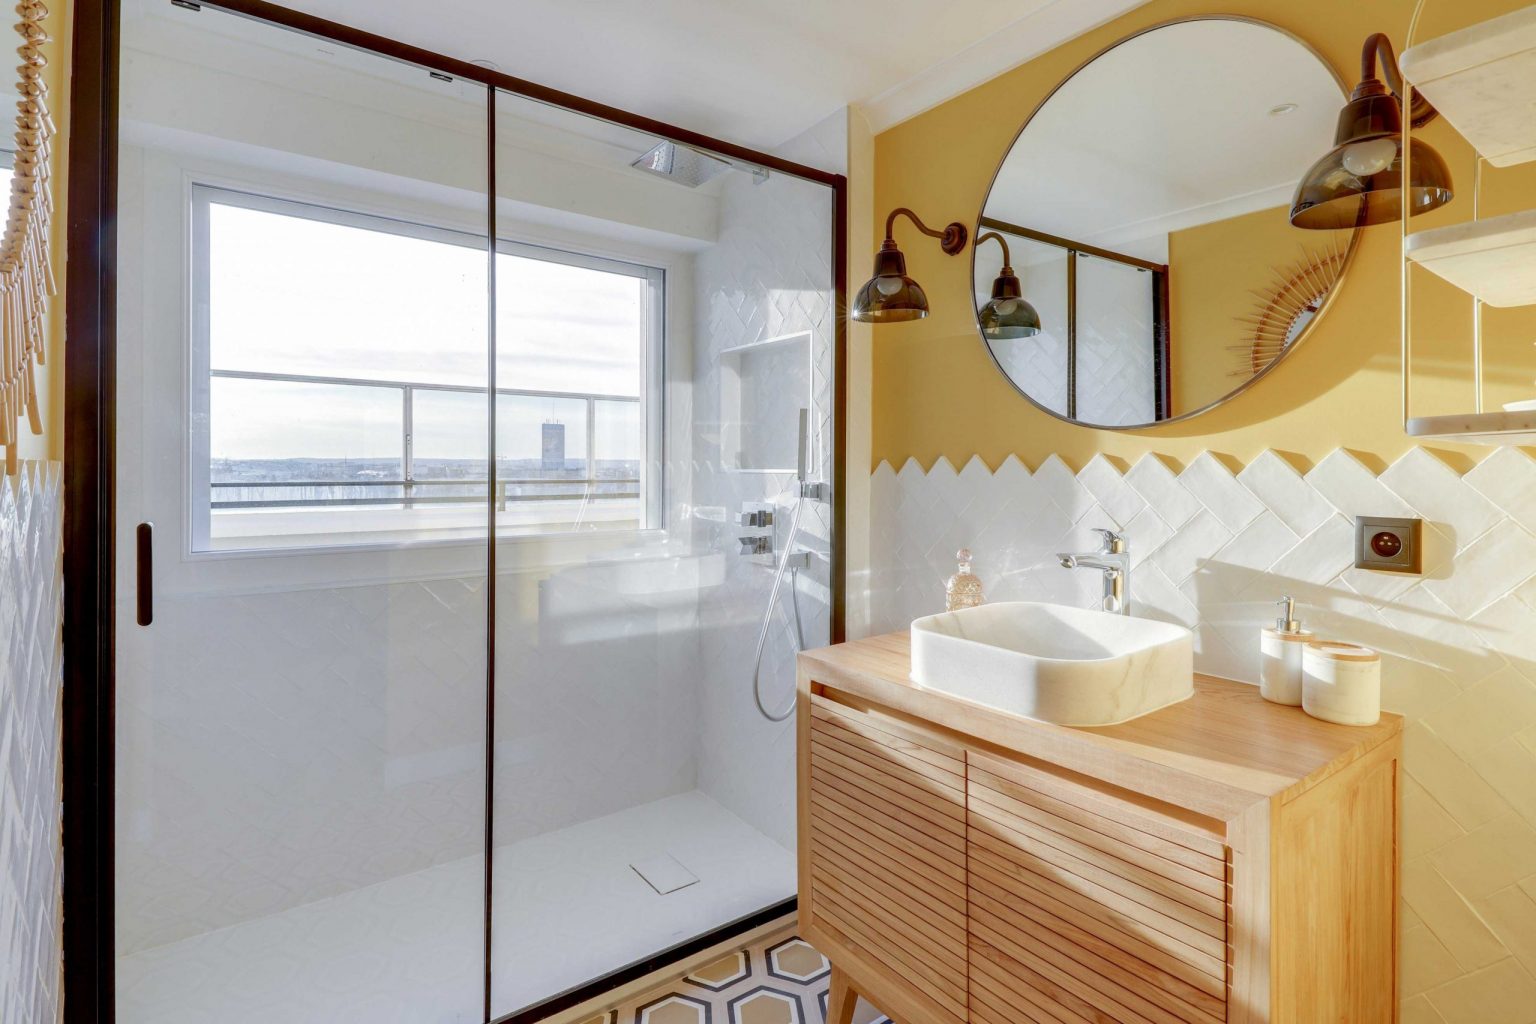 salle de bain design avec mur jaune